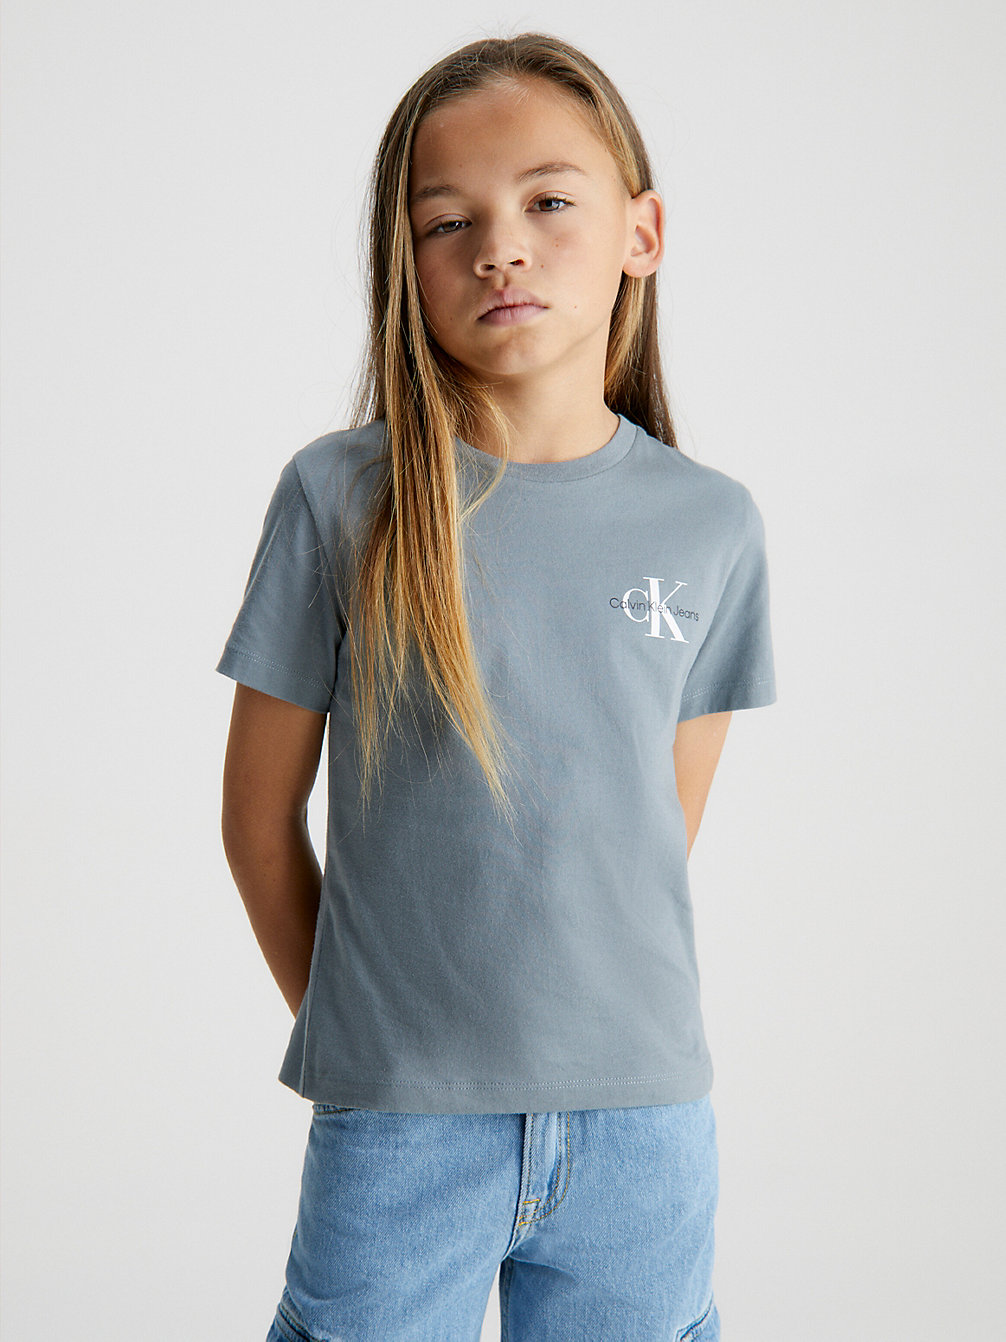 OVERCAST GREY T-Shirt En Coton Bio undefined garcons Calvin Klein